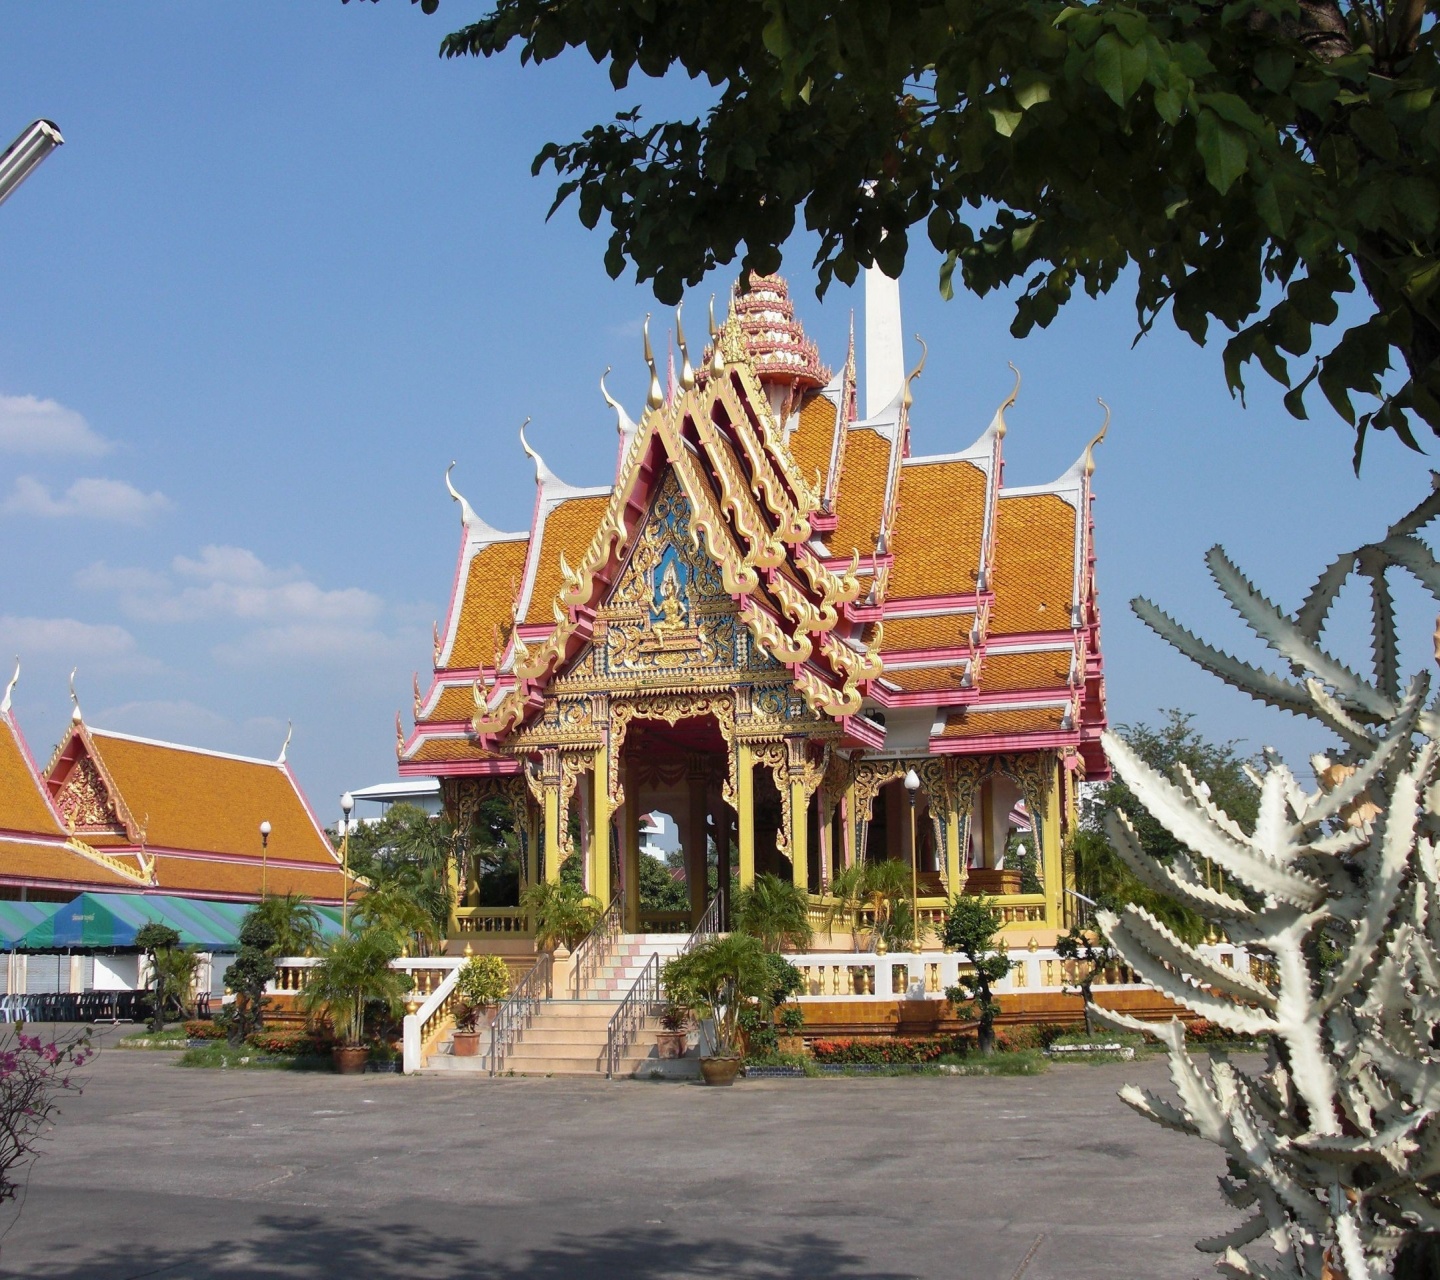 Suan Luang Bangkok Thailand